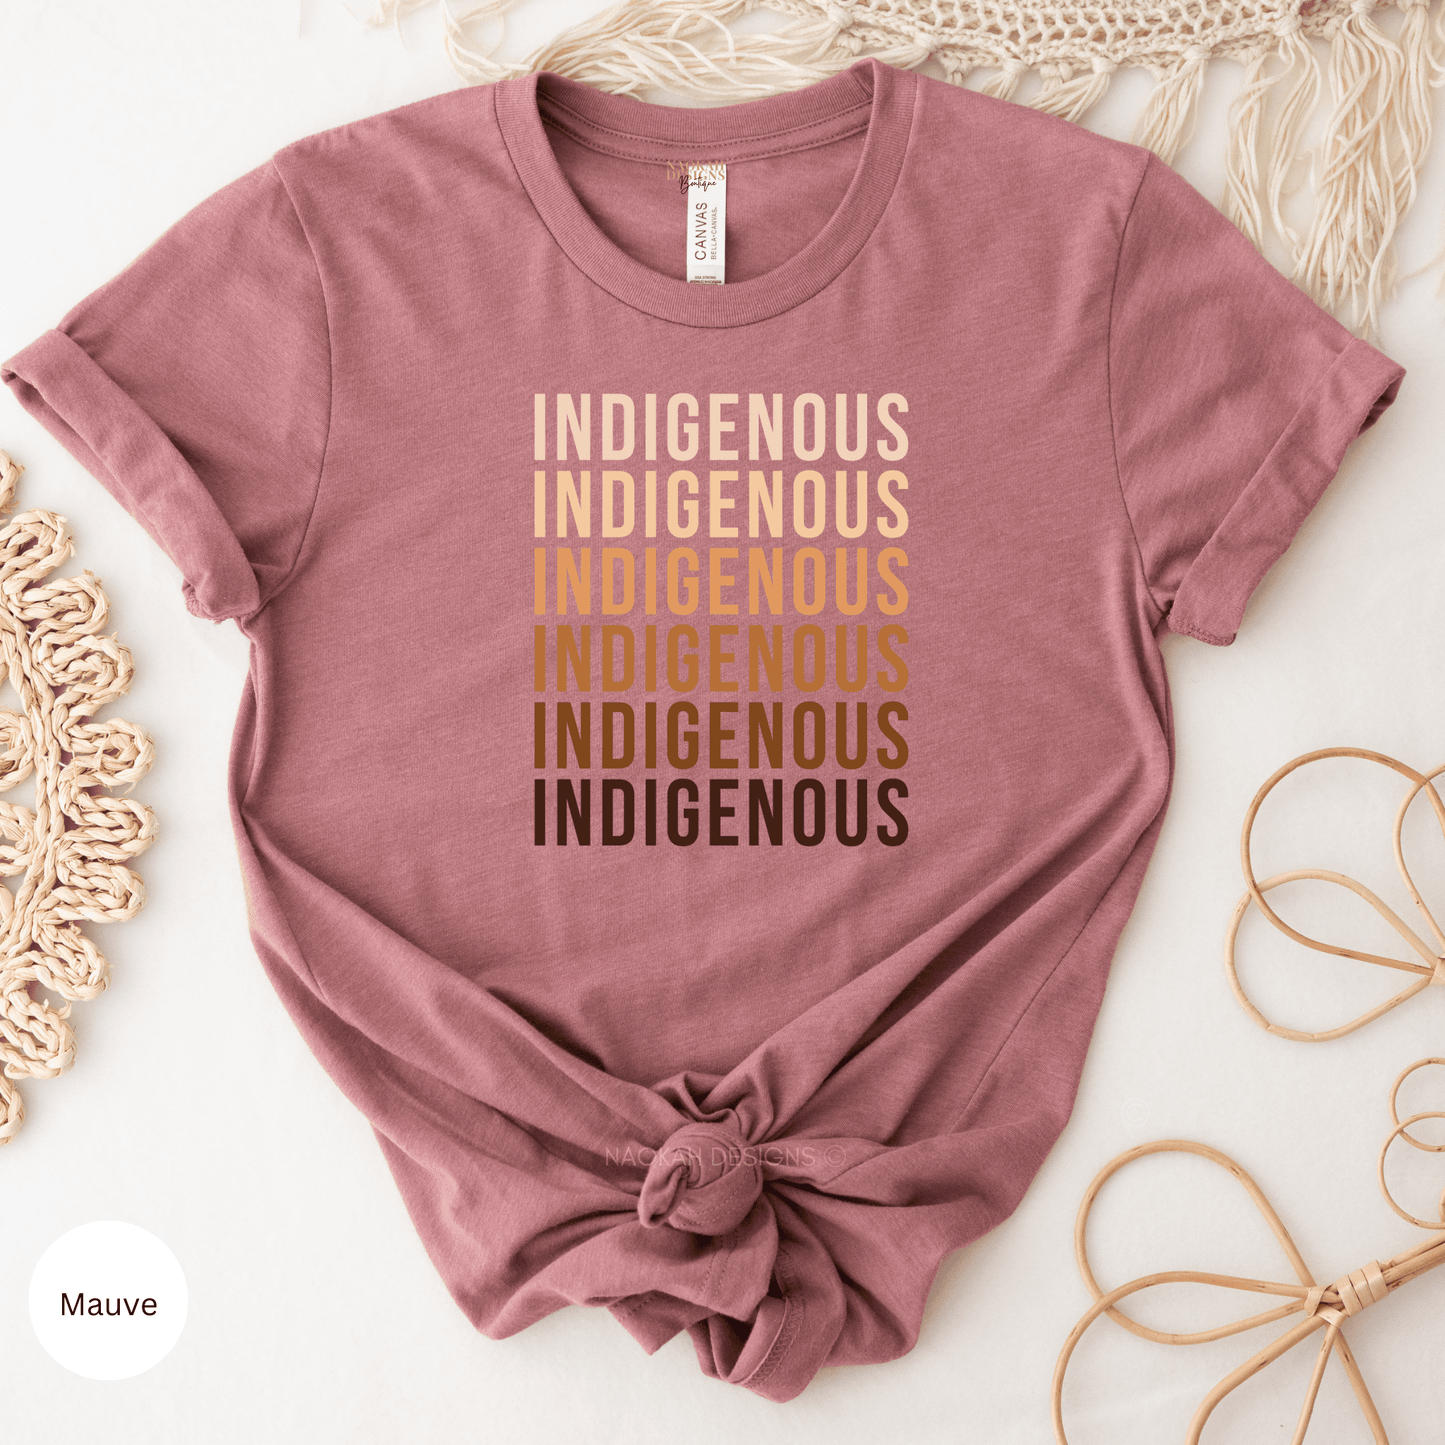 indigenous shirt, indigenous pride, indigenous resilient shirt, native rights shirt, indigenous melanin shirt, indigenous repeated words tee